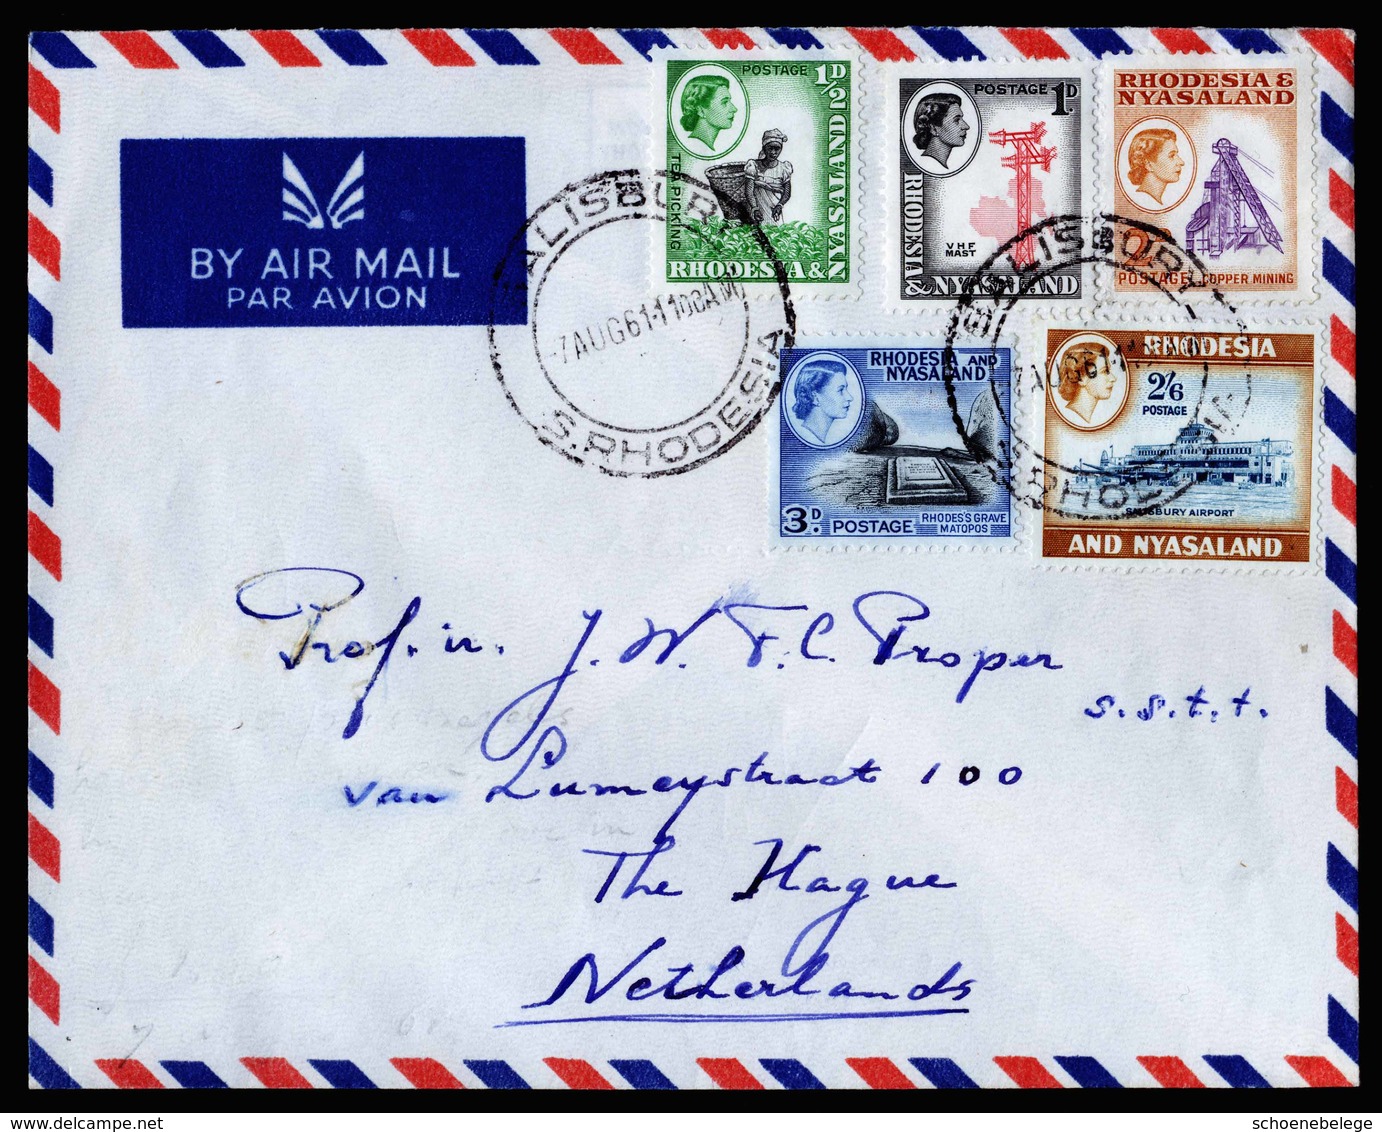 A5840) UK Rhodesia & Nyasaland Cover Salisbury 07.08.61 To Netherlands - Rodesia & Nyasaland (1954-1963)